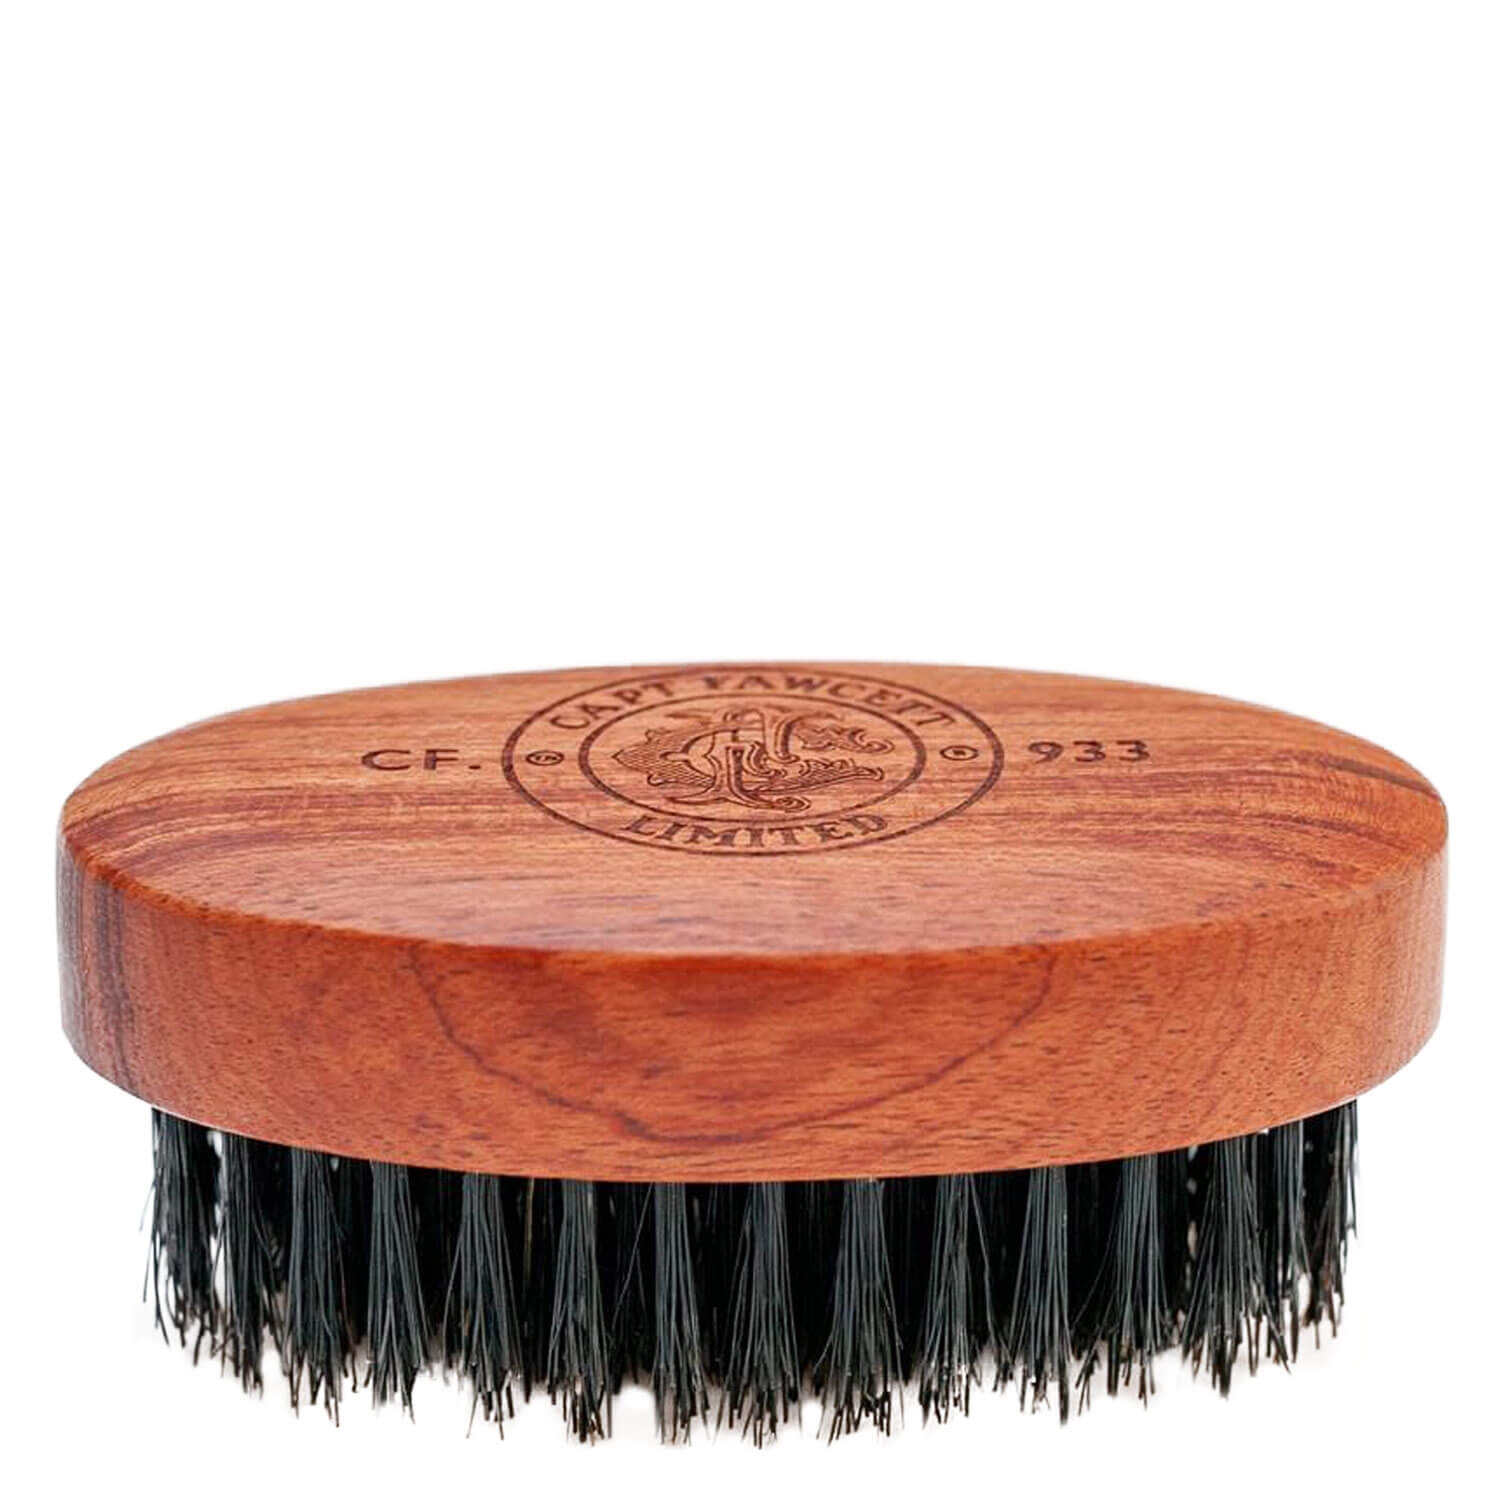 Produktbild von Capt. Fawcett Tools - Wild Boar Beard Brush